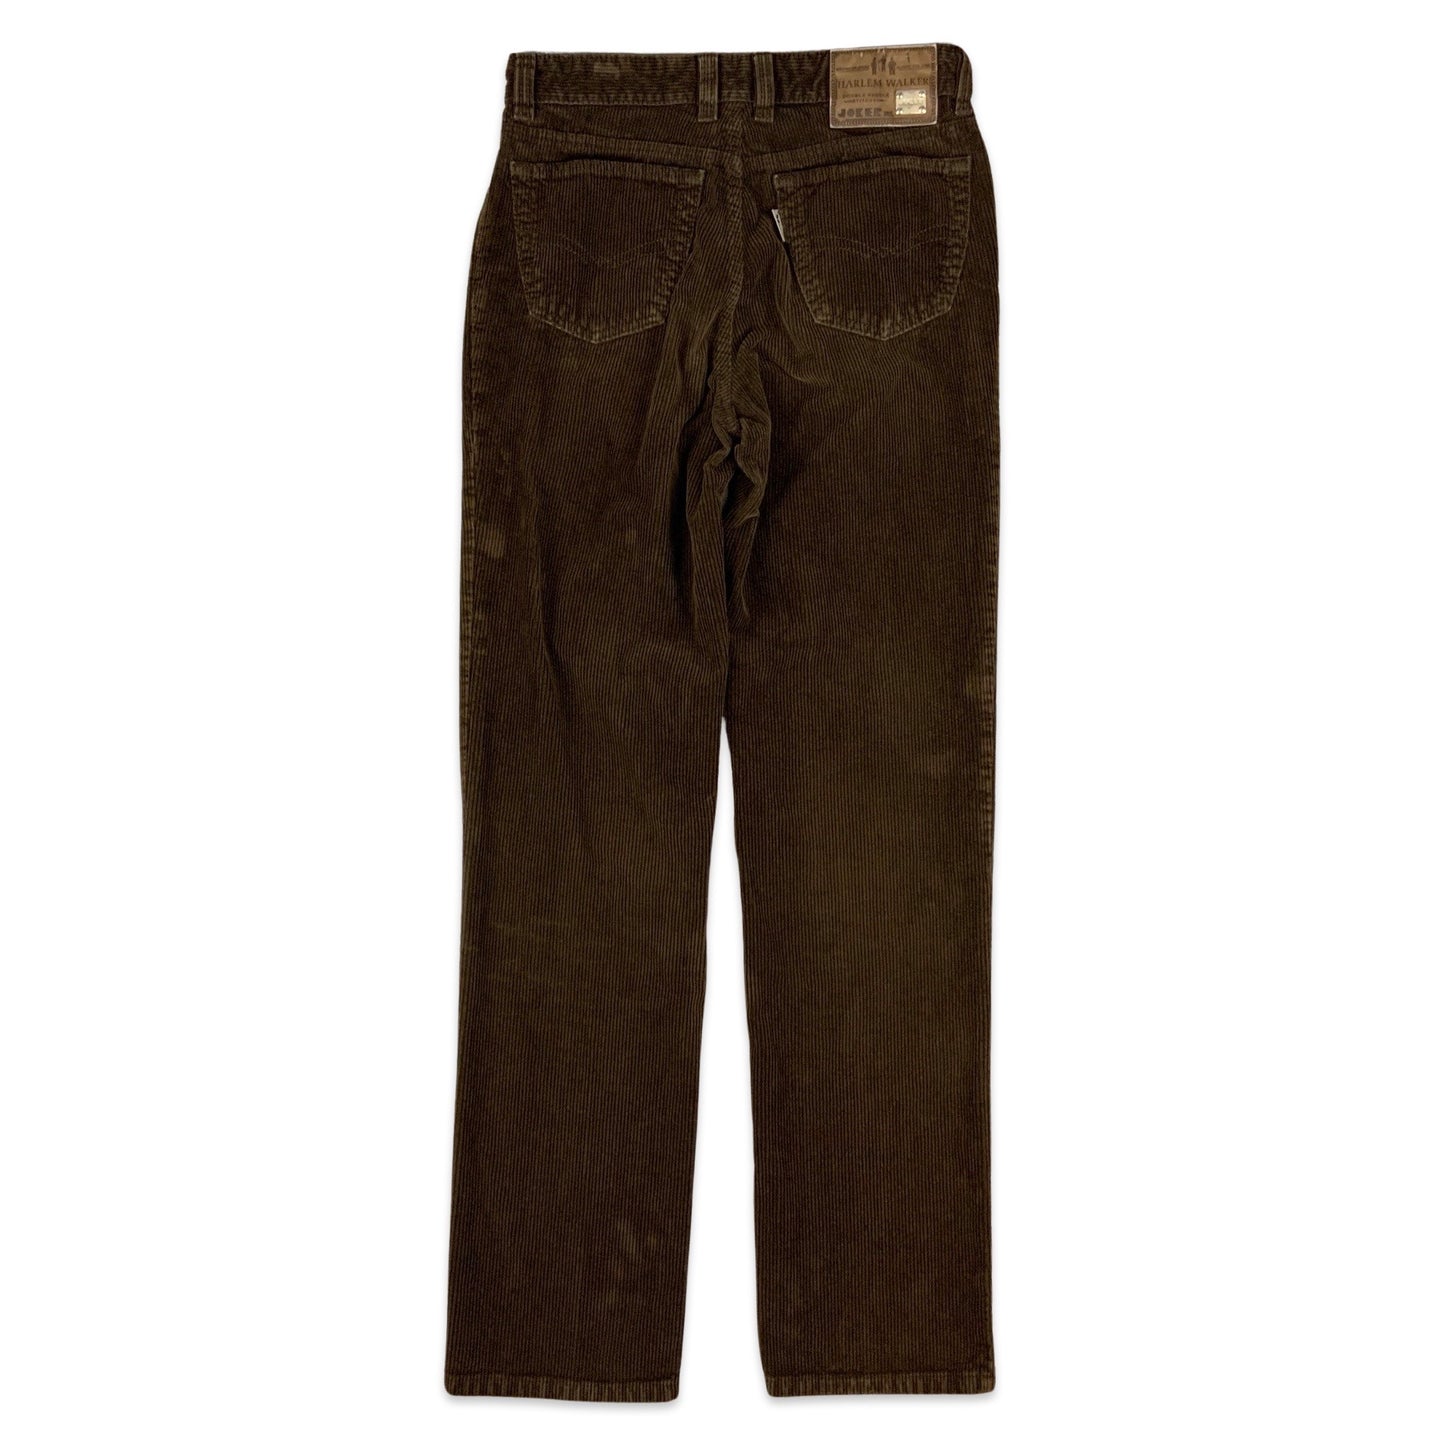 Vintage Brown Cord Trousers 33W 35L